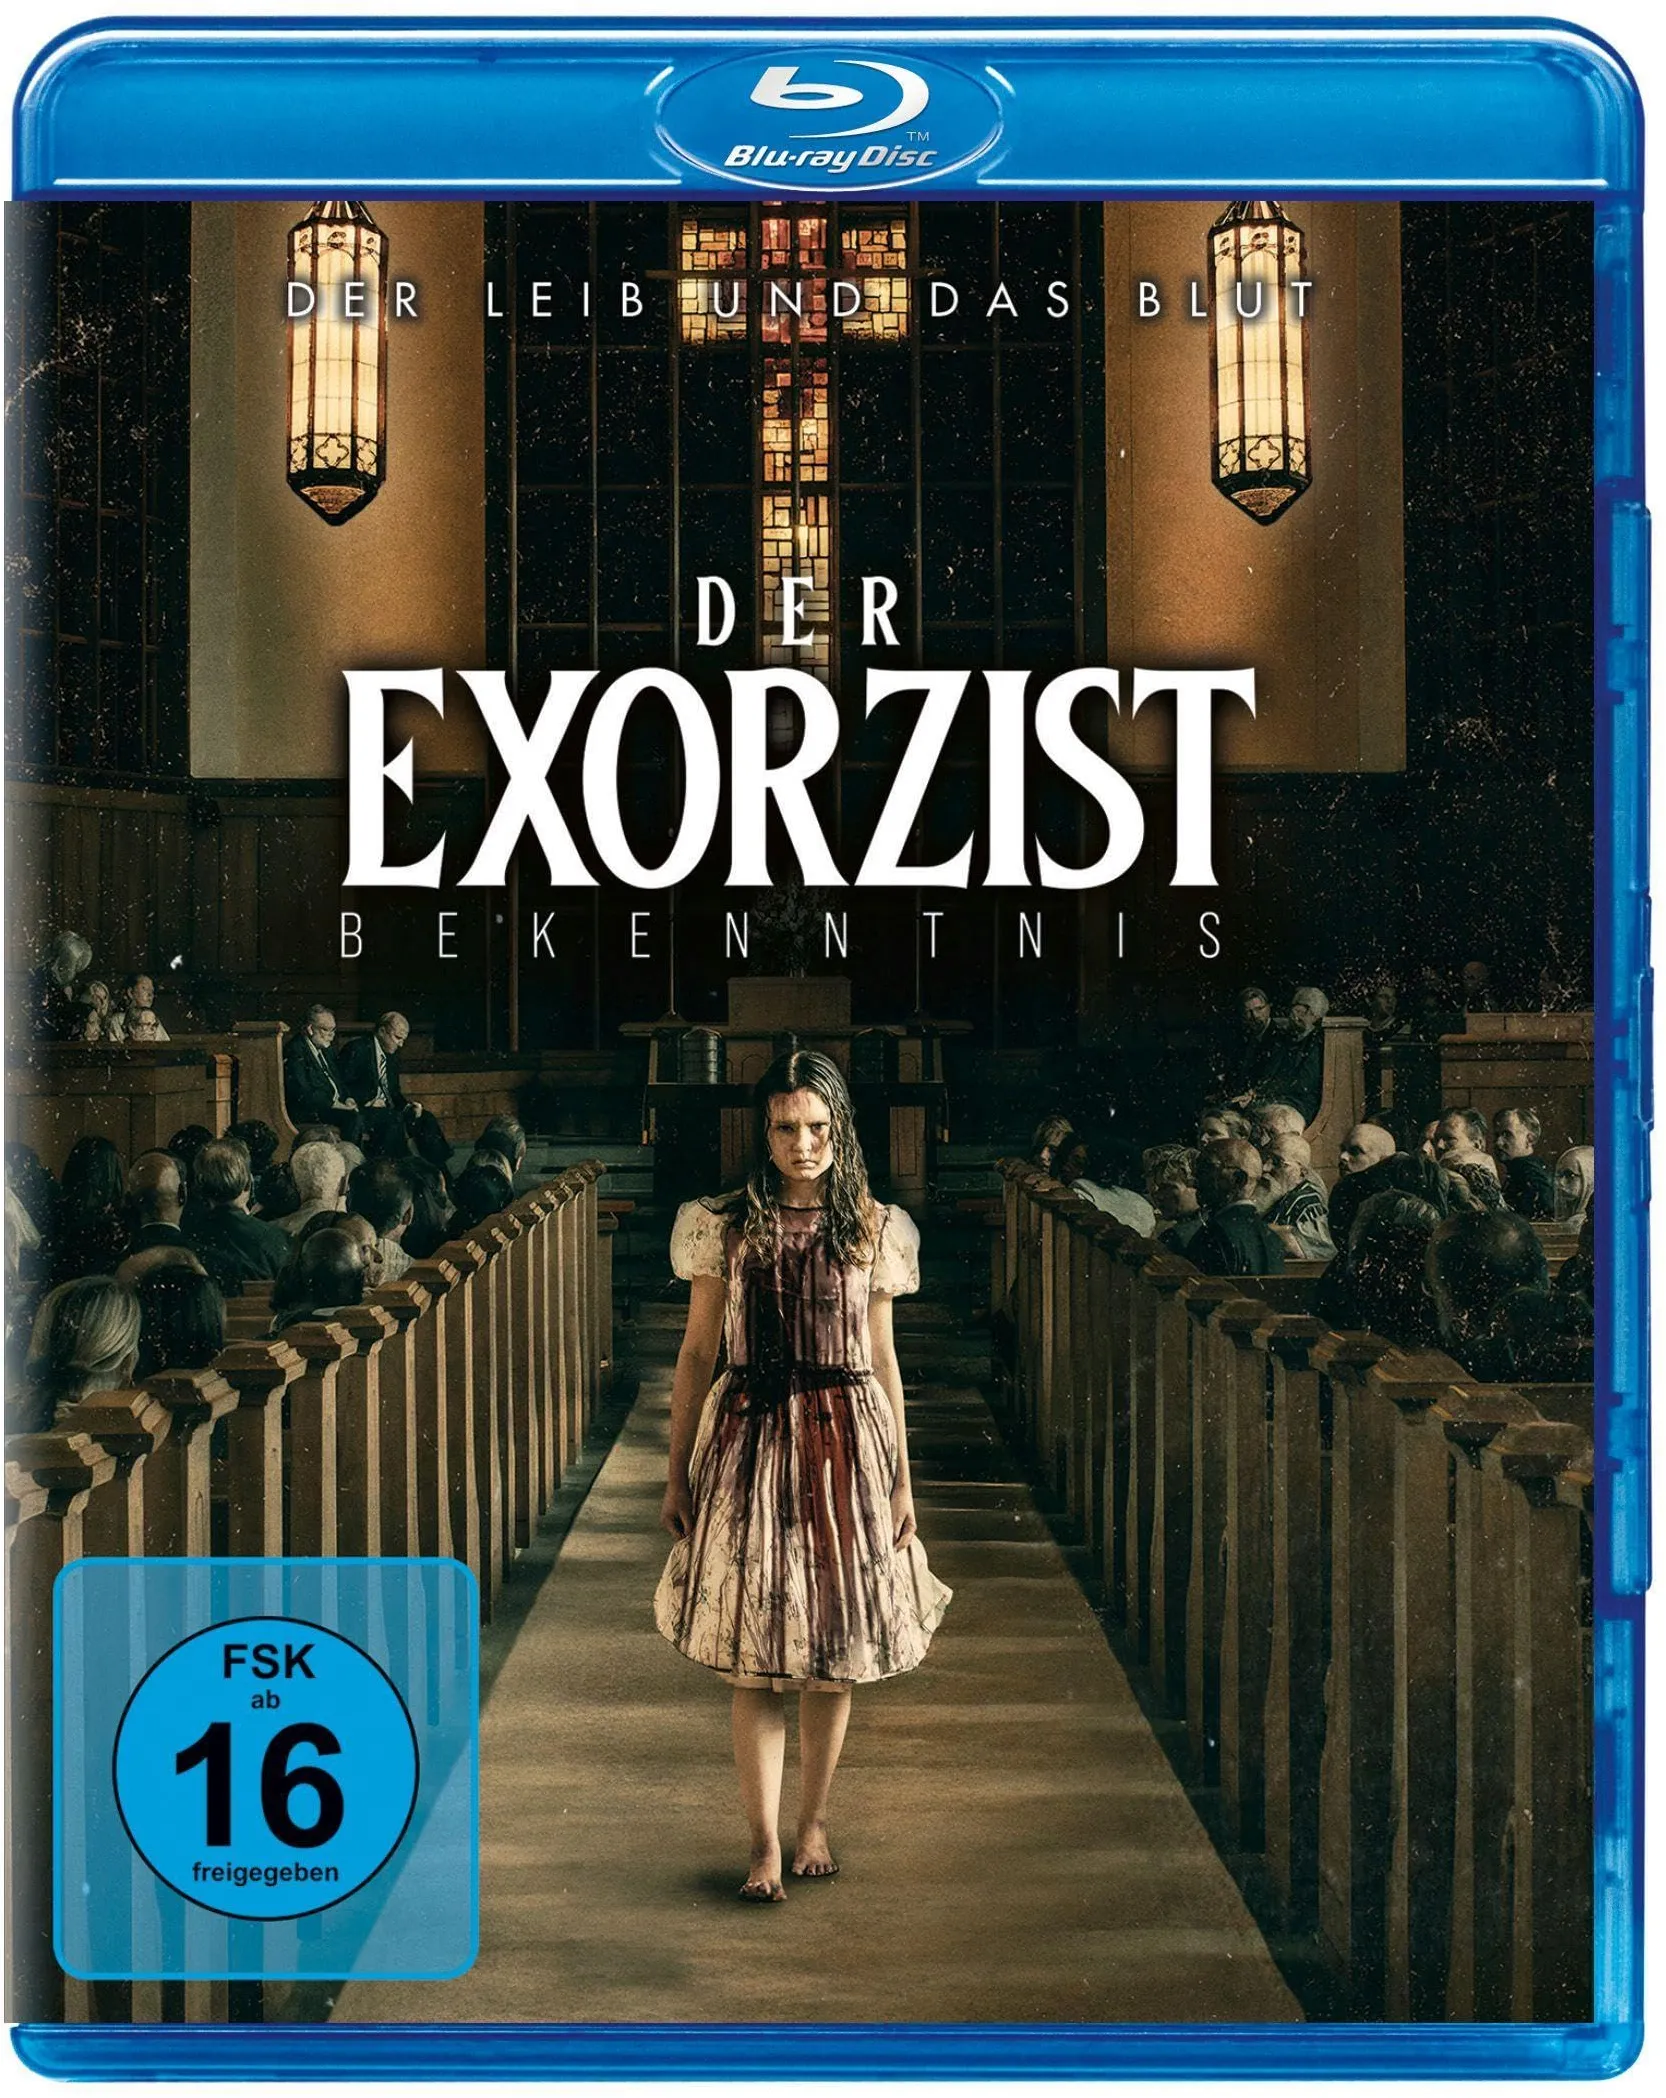 Der Exorzist: Bekenntnis [Blu-ray] (Neu differenzbesteuert)